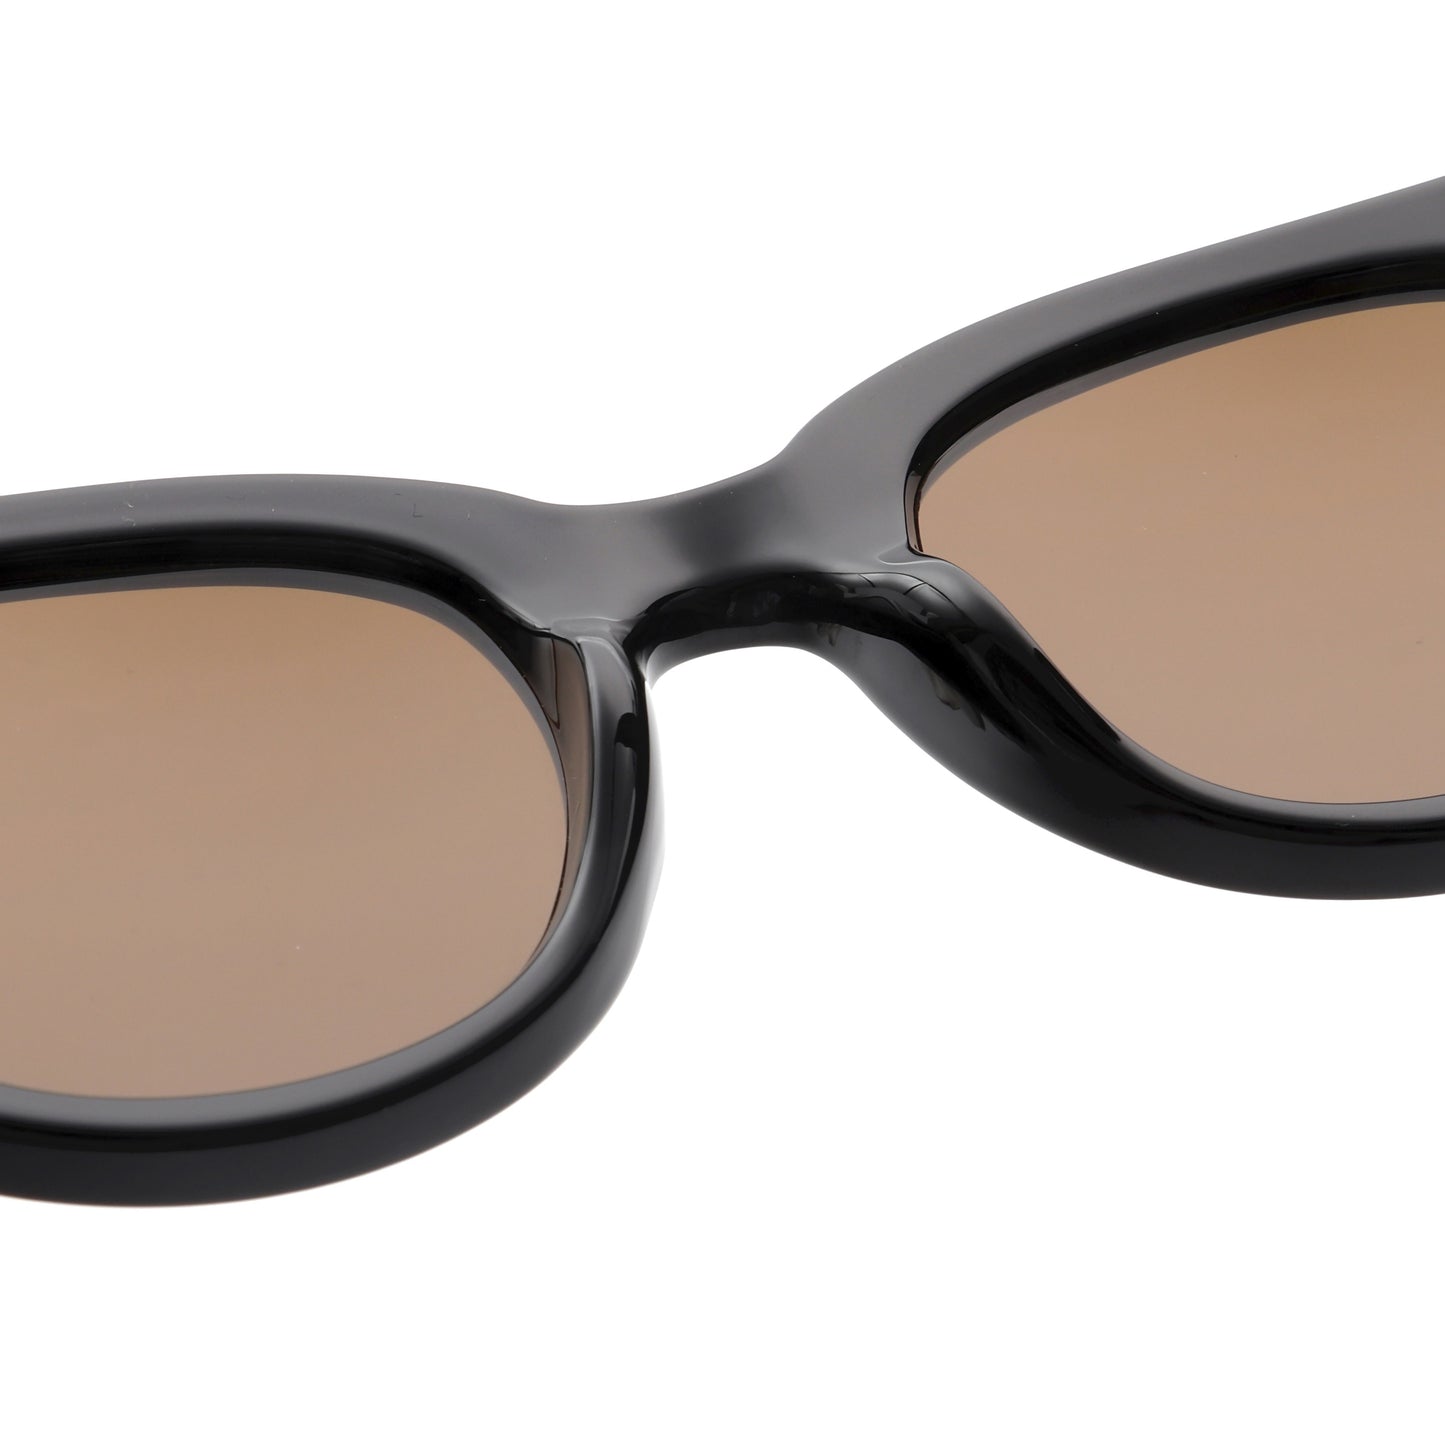 A.Kjaerbede Lilly Sunglasses in Black color